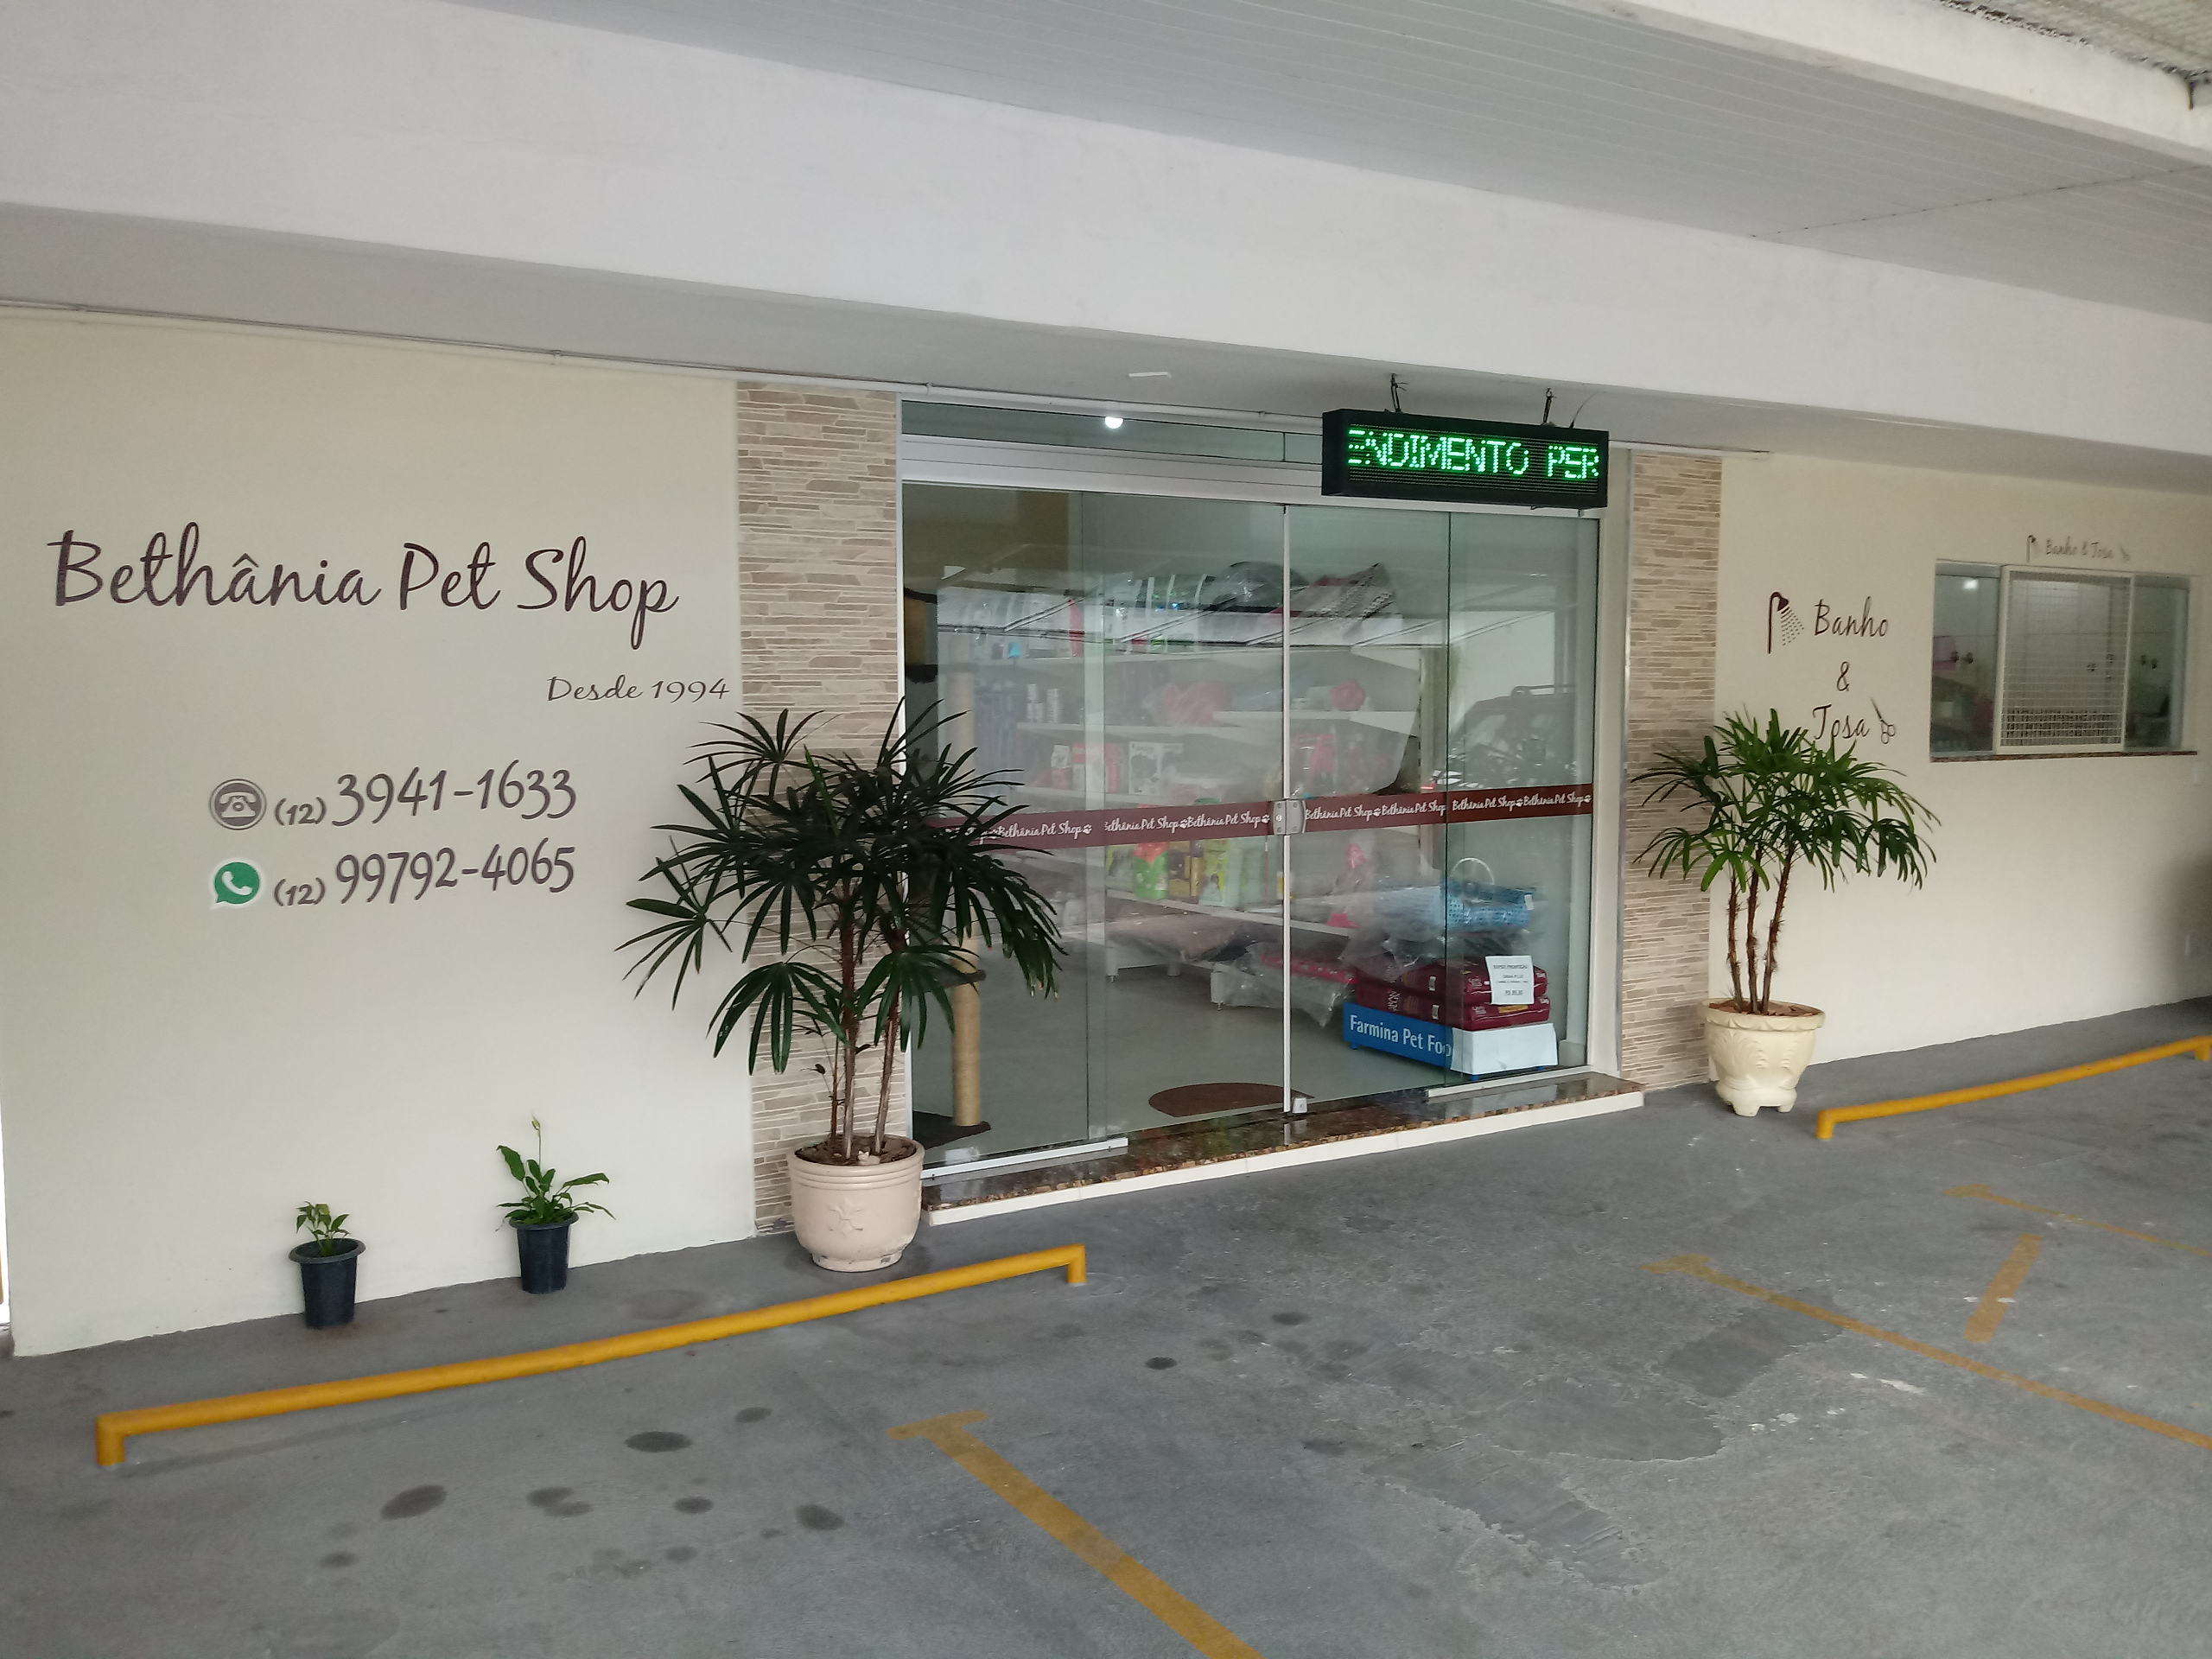 Bethânia Pet Shop